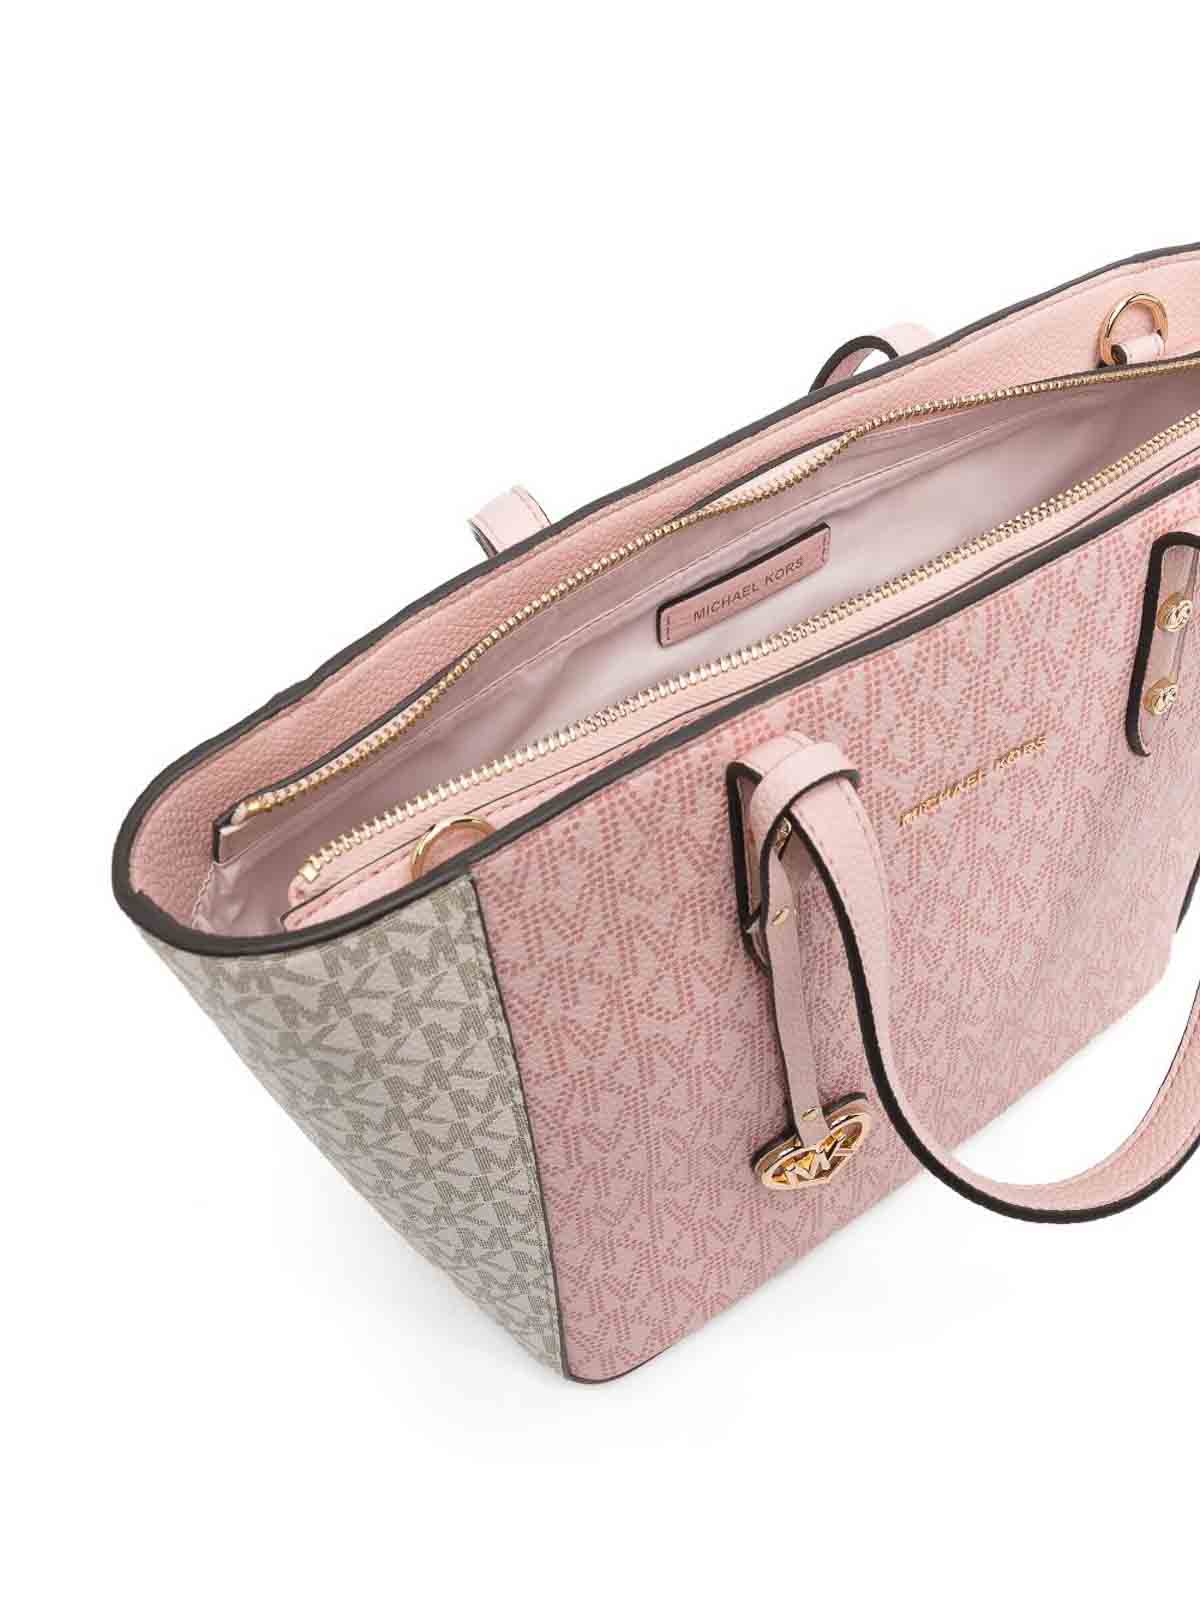 Never used pink Michael Kors Tote bag | Michael kors tote bags, Michael  kors tote, Michael kors